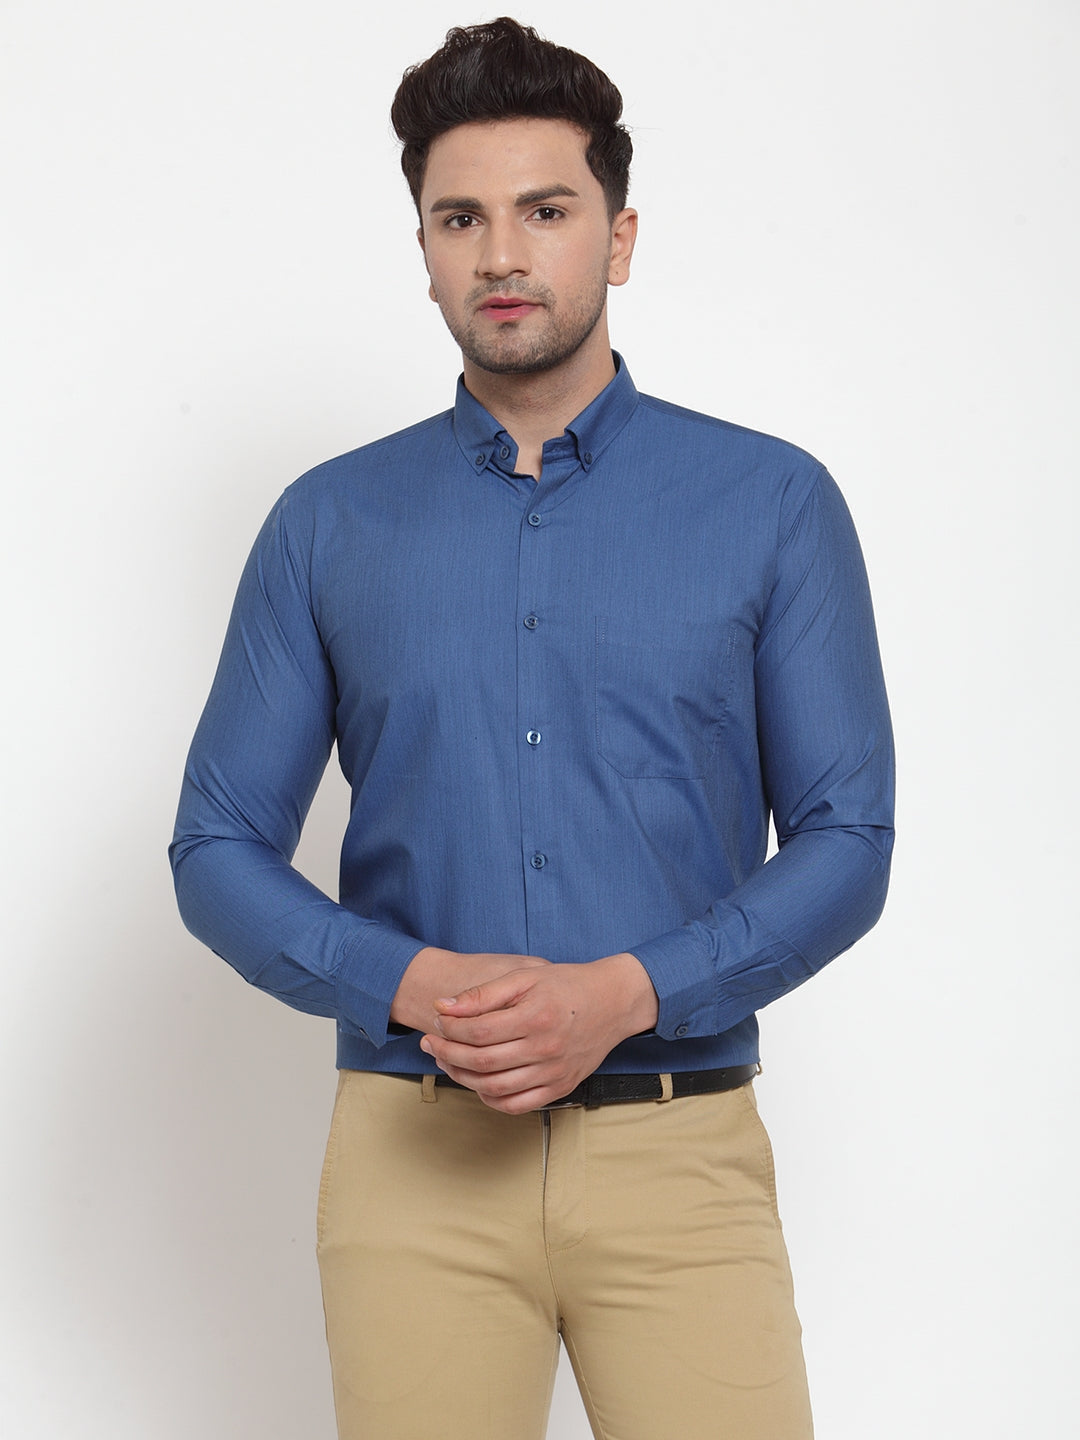 Men's Blue Cotton Solid Button Down Formal Shirts ( SF 713Peacock ) - Jainish